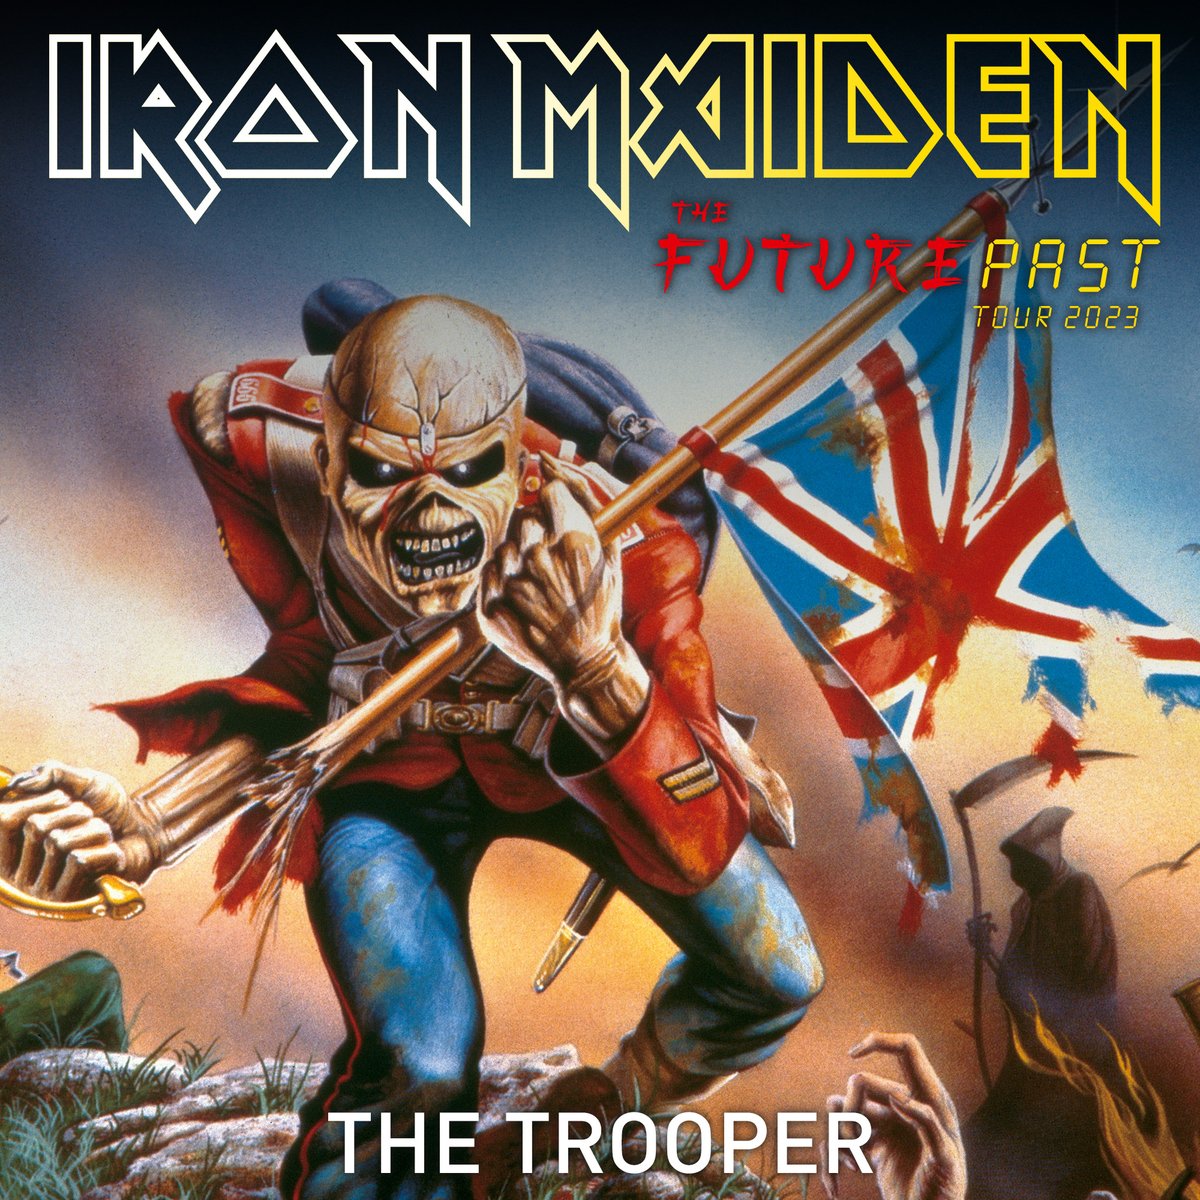 Fresco Melancólico saldar Iron Maiden on Twitter: "The Trooper #IronMaiden #TheFuturePastTour  https://t.co/pxmNxL6jJT" / Twitter